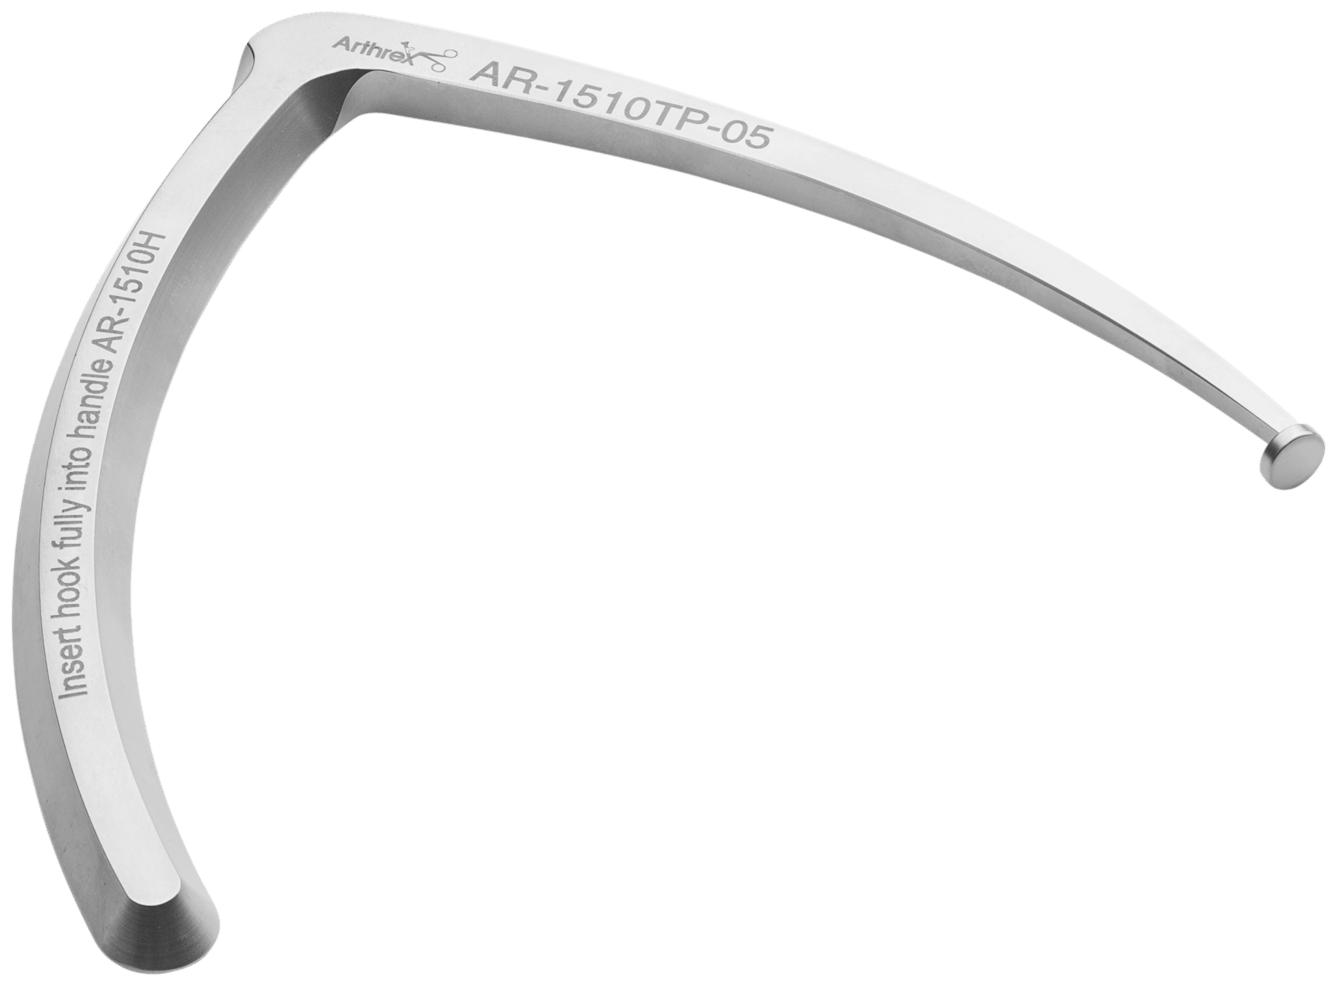 Marking Hook for Trochleoplasty, 5 mm offset